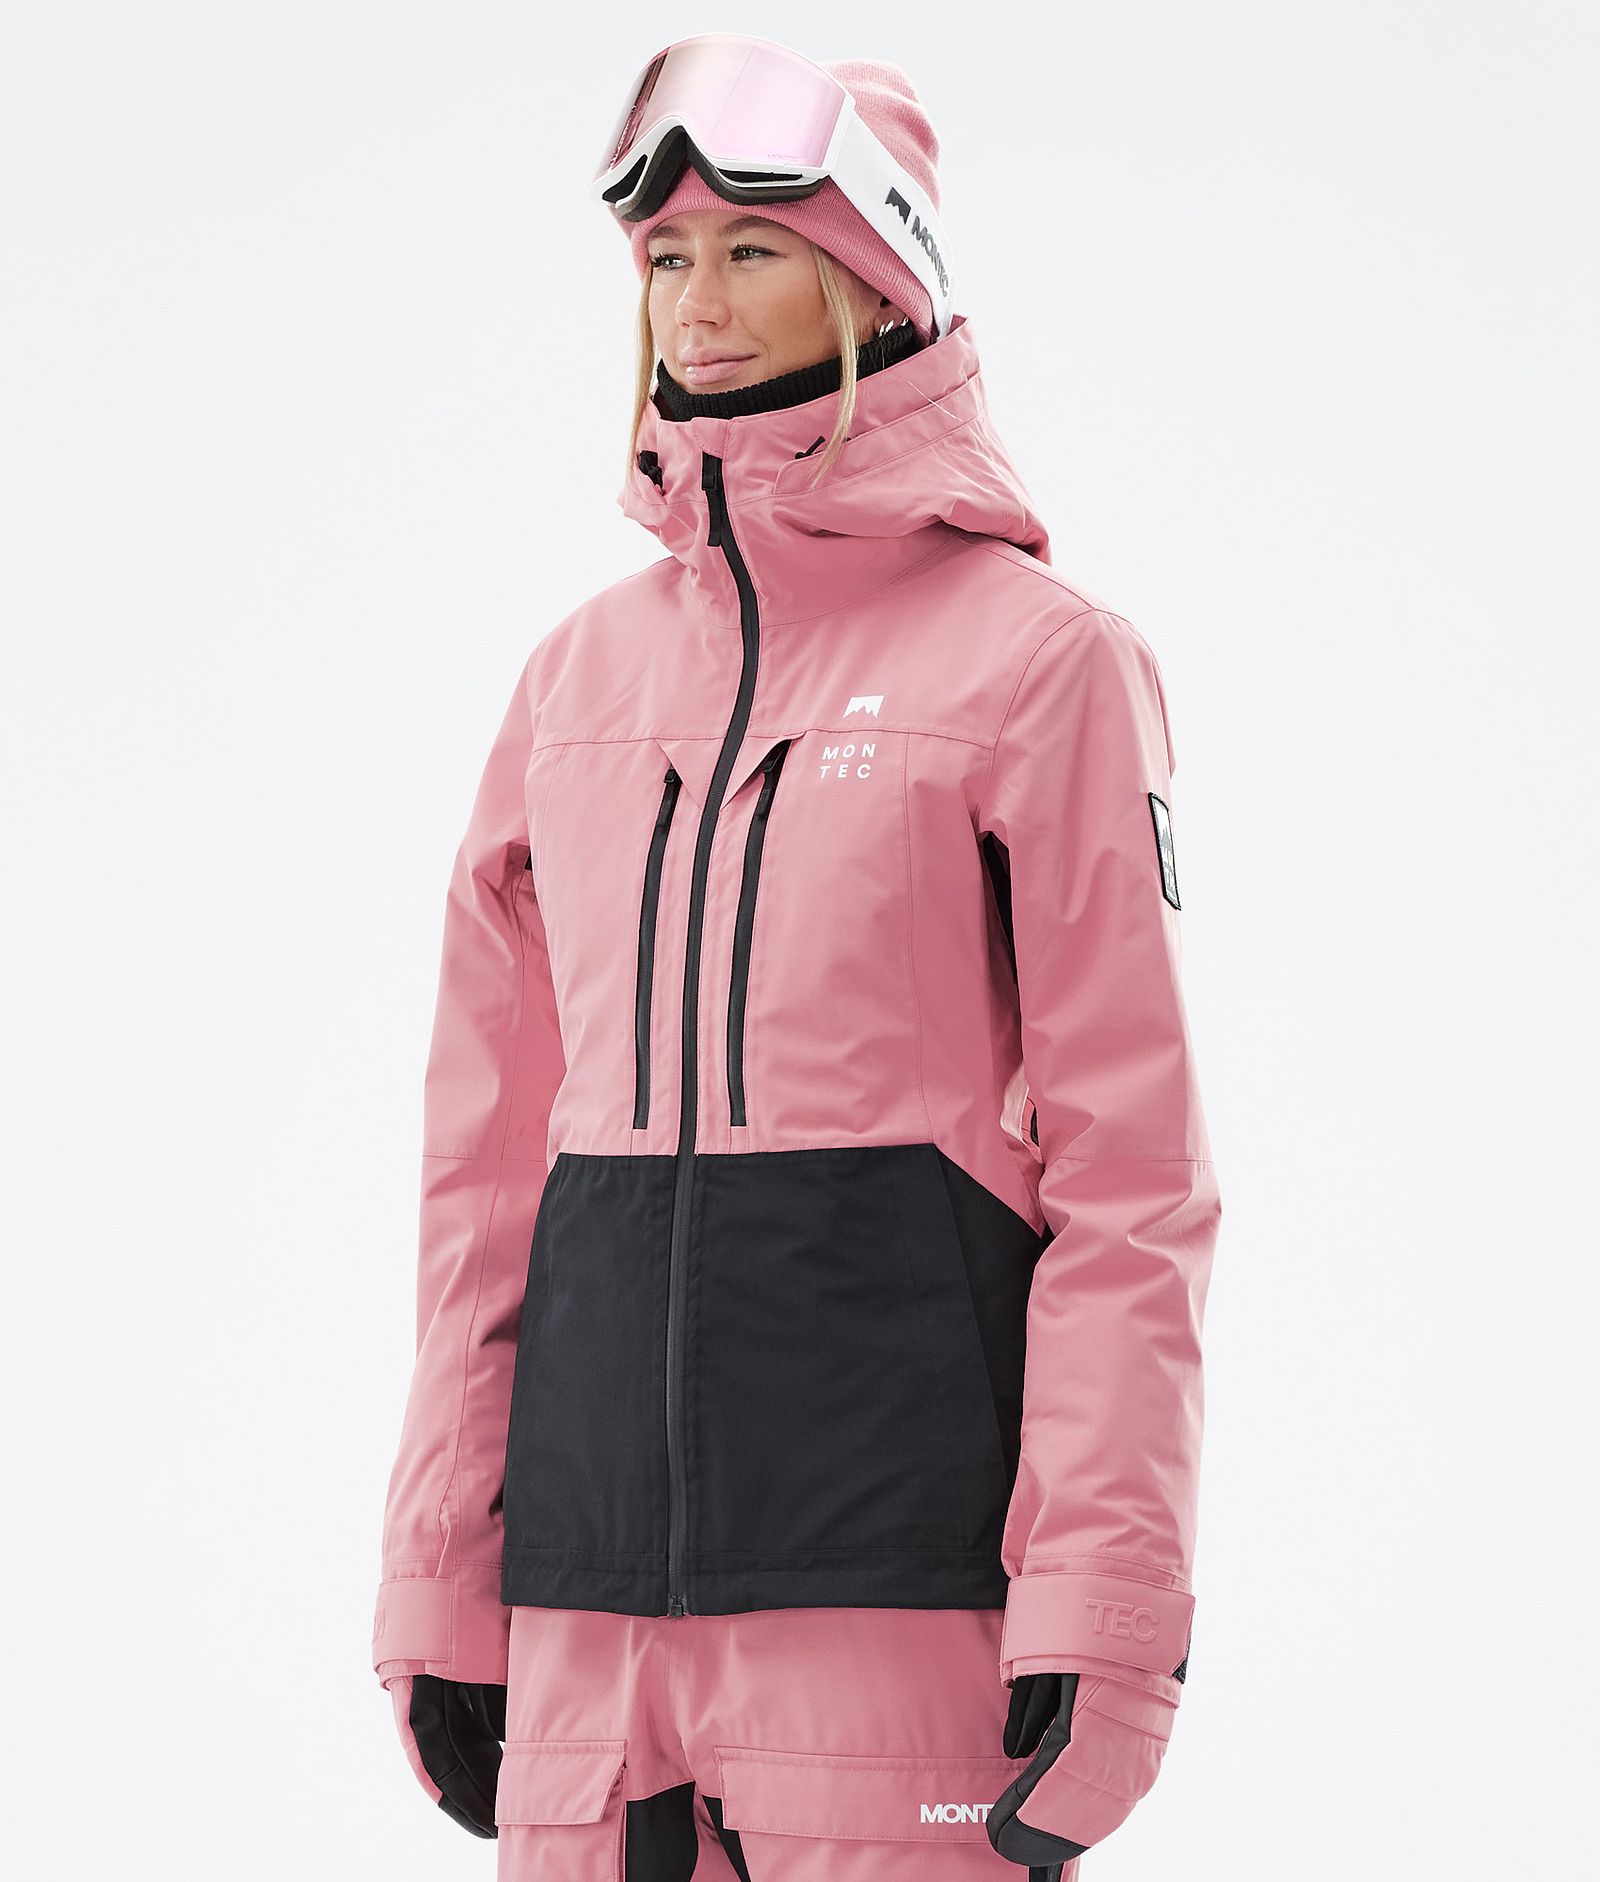 Moss W Ski Jacket Women Pink/Black, Image 1 of 10